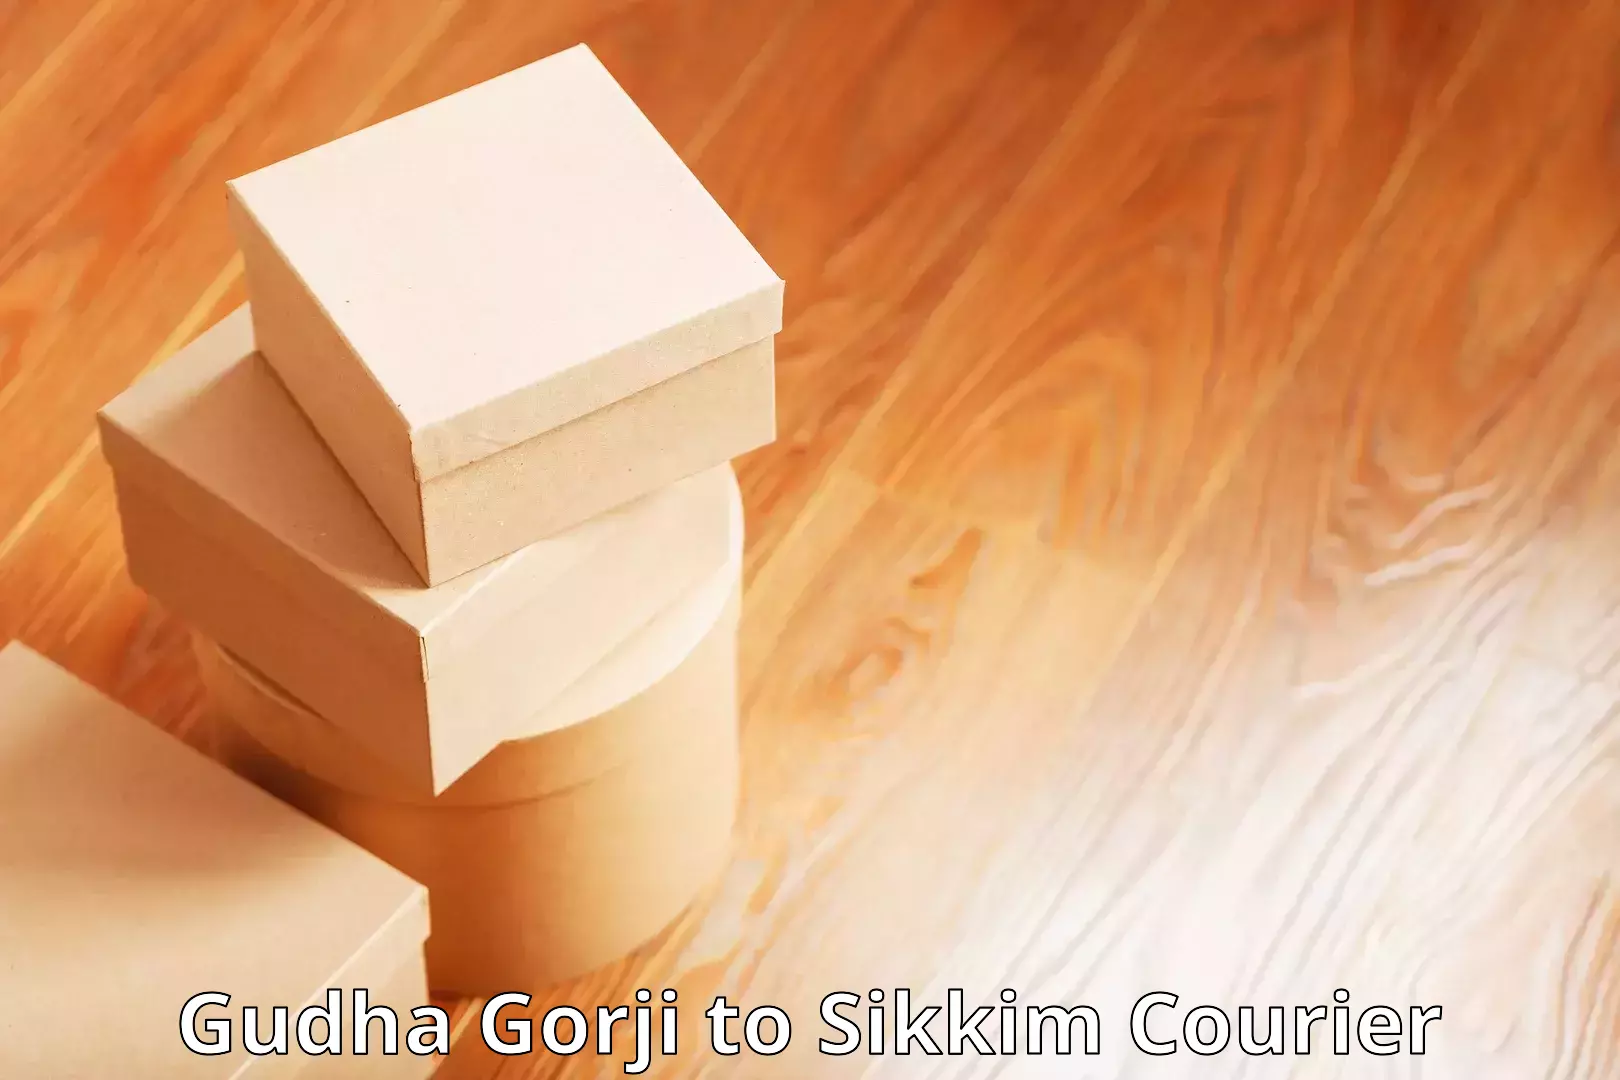 Courier service partnerships Gudha Gorji to Sikkim